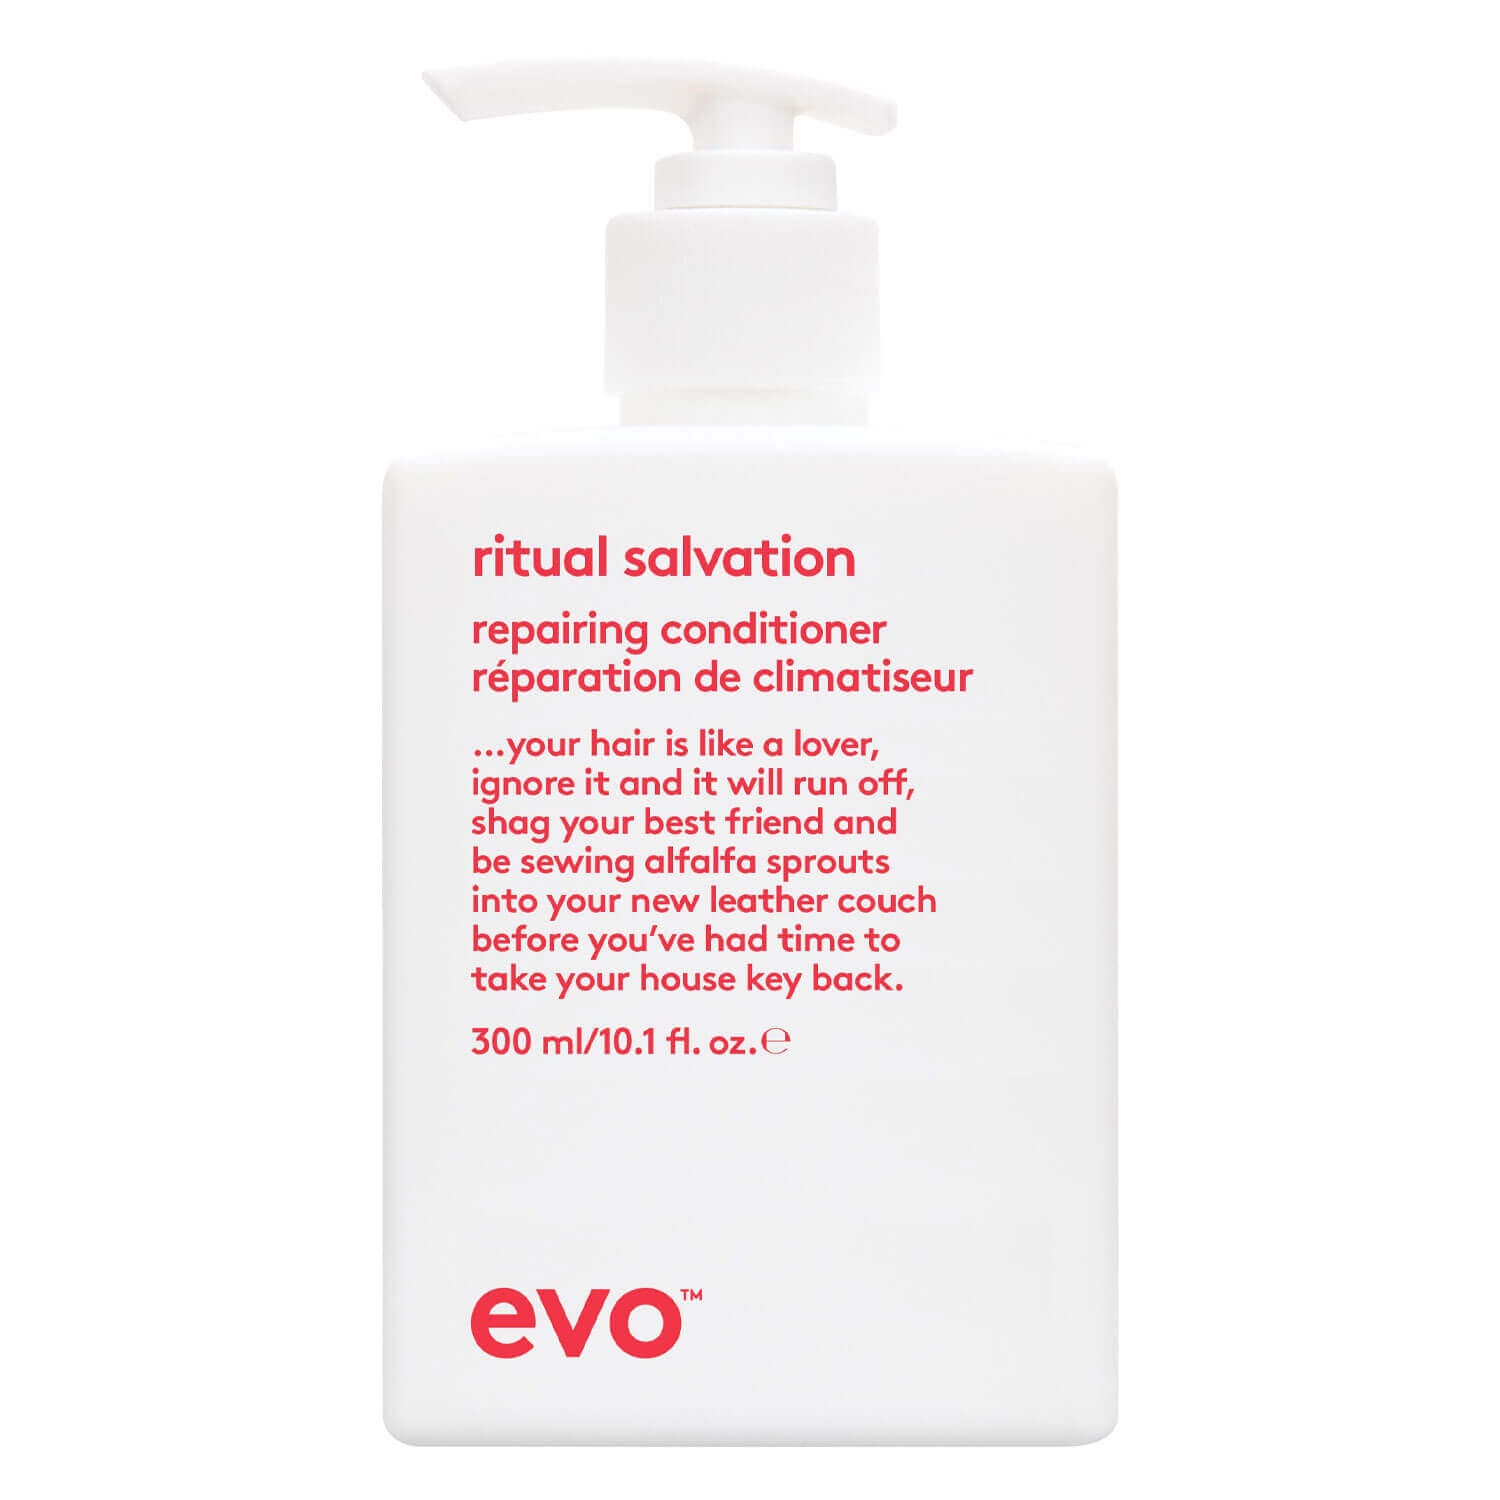 Produktbild von evo care - ritual salvation repairing conditioner